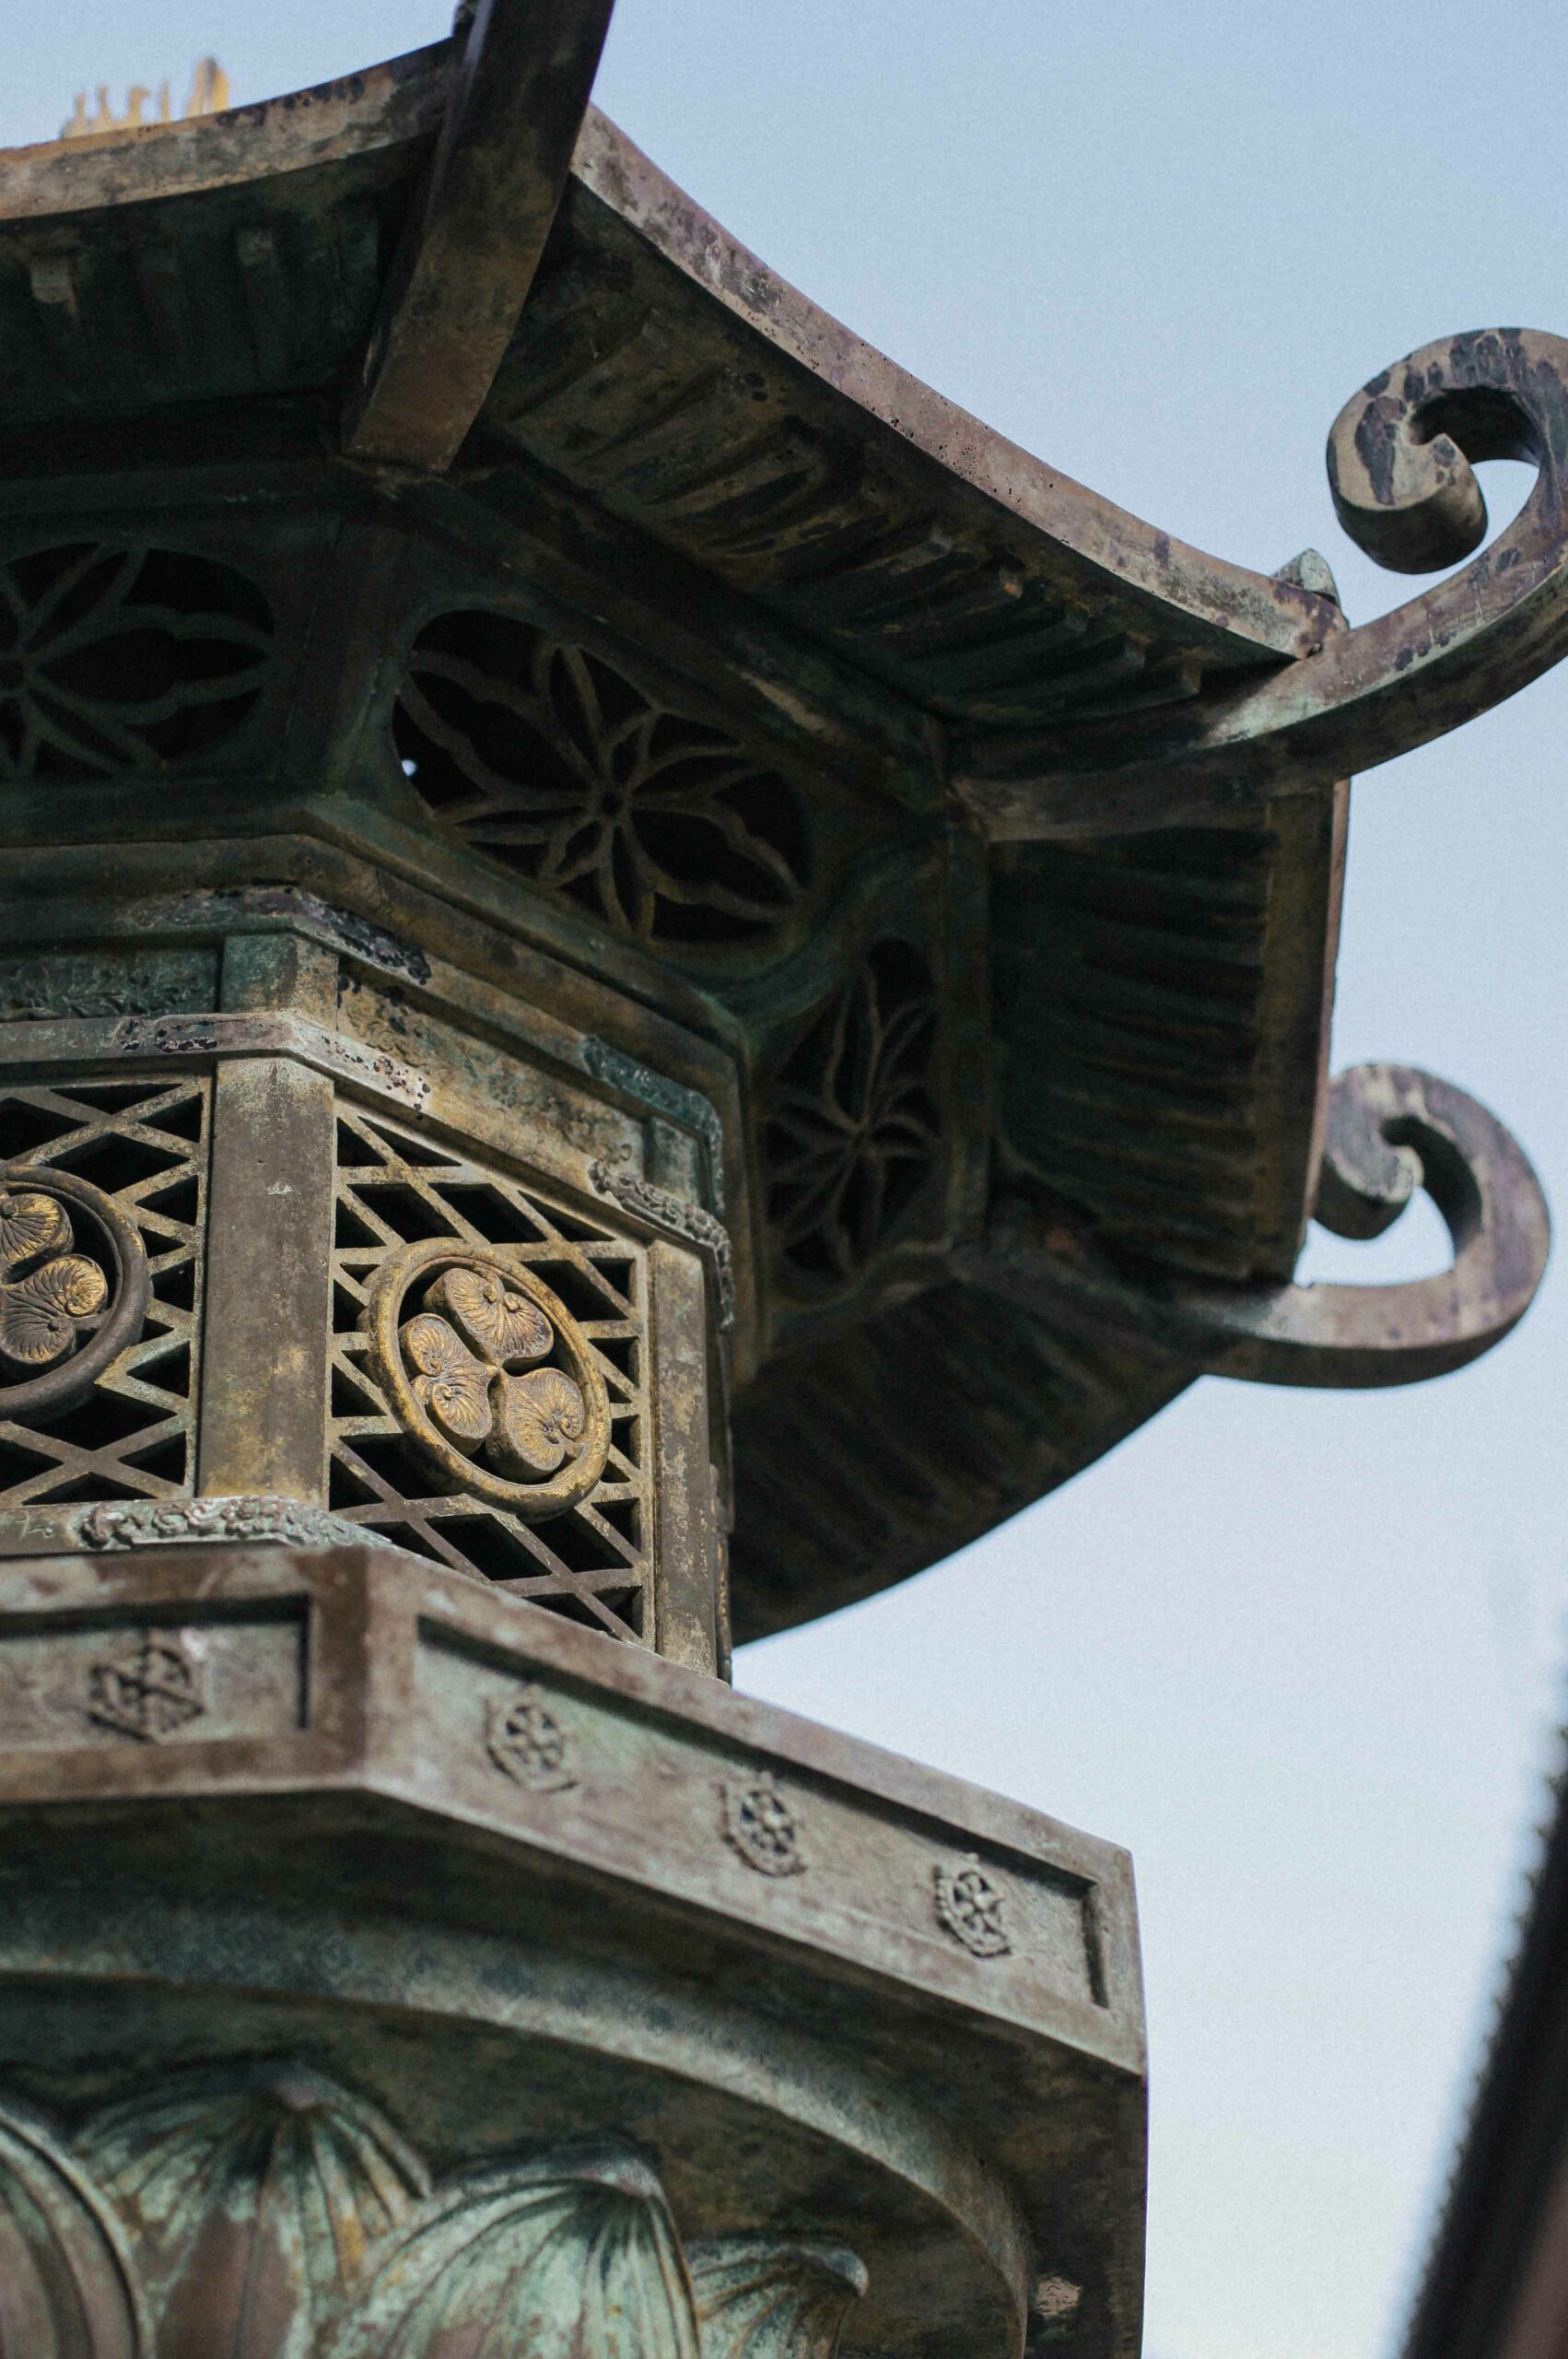 Bronze lanterns can be found throughout Enryaku-ji, their colours changing over time.